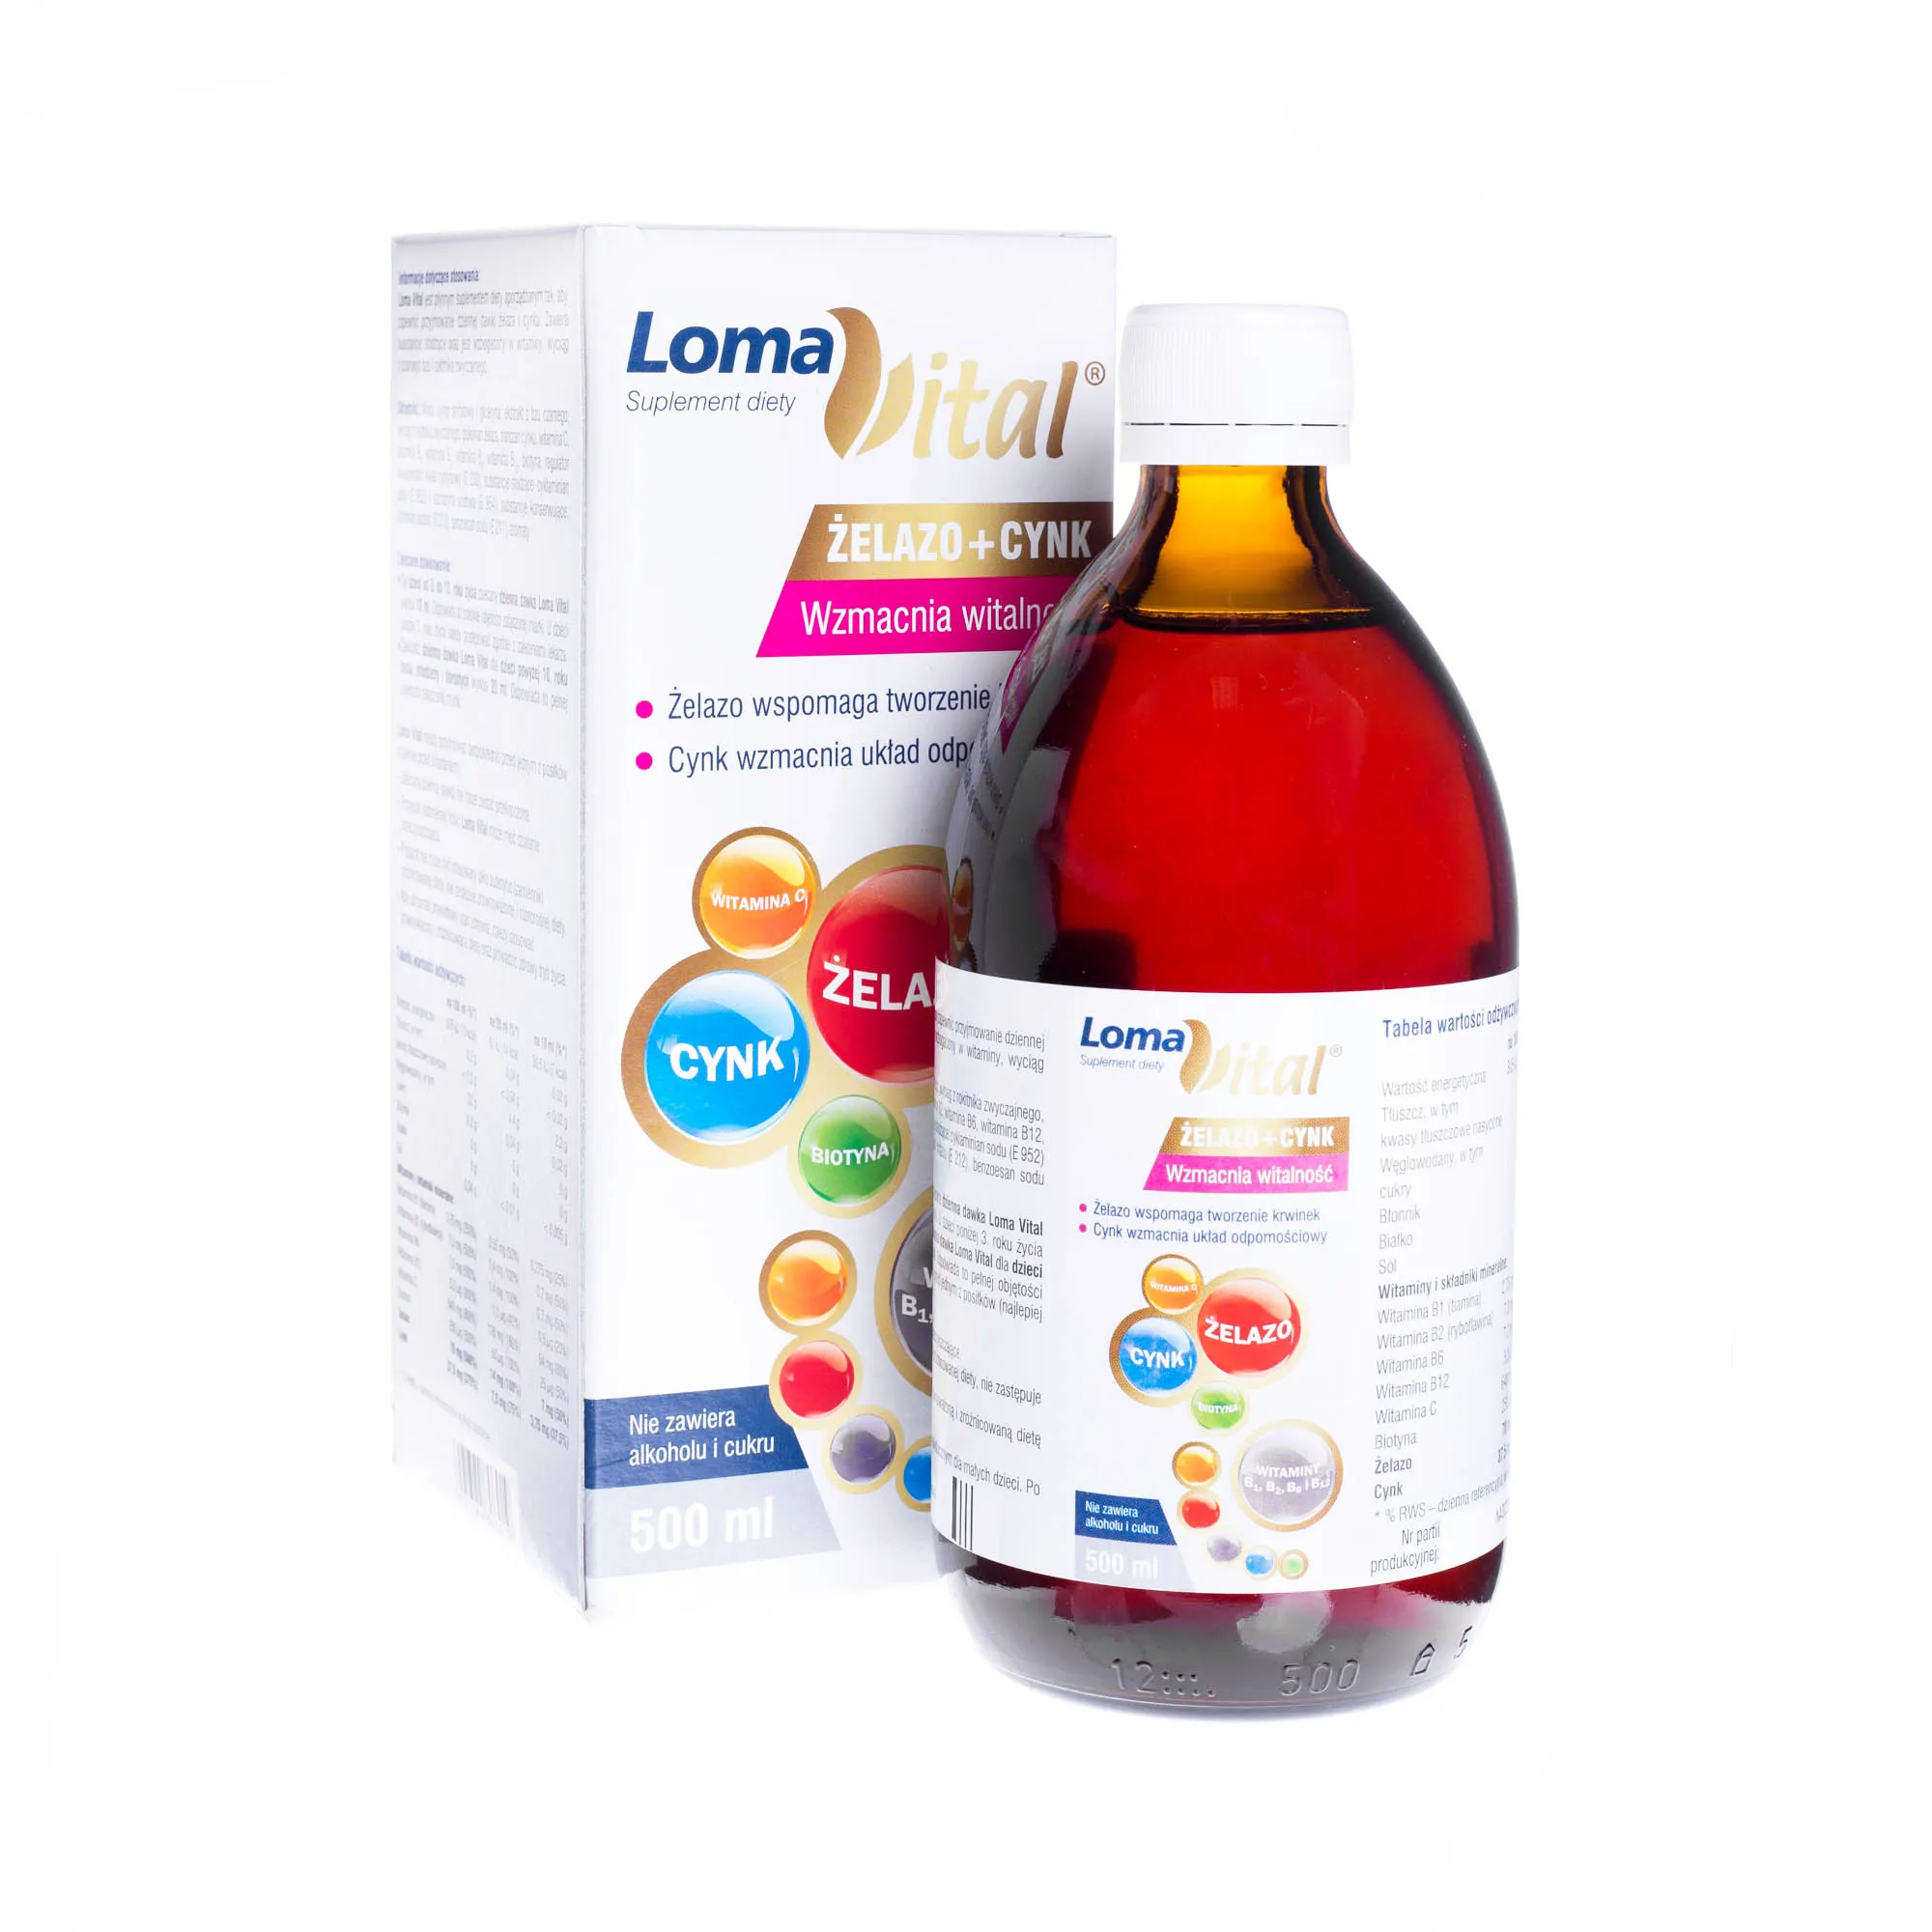 Loma Vital żelazo + cynk, suplement diety, 500 ml